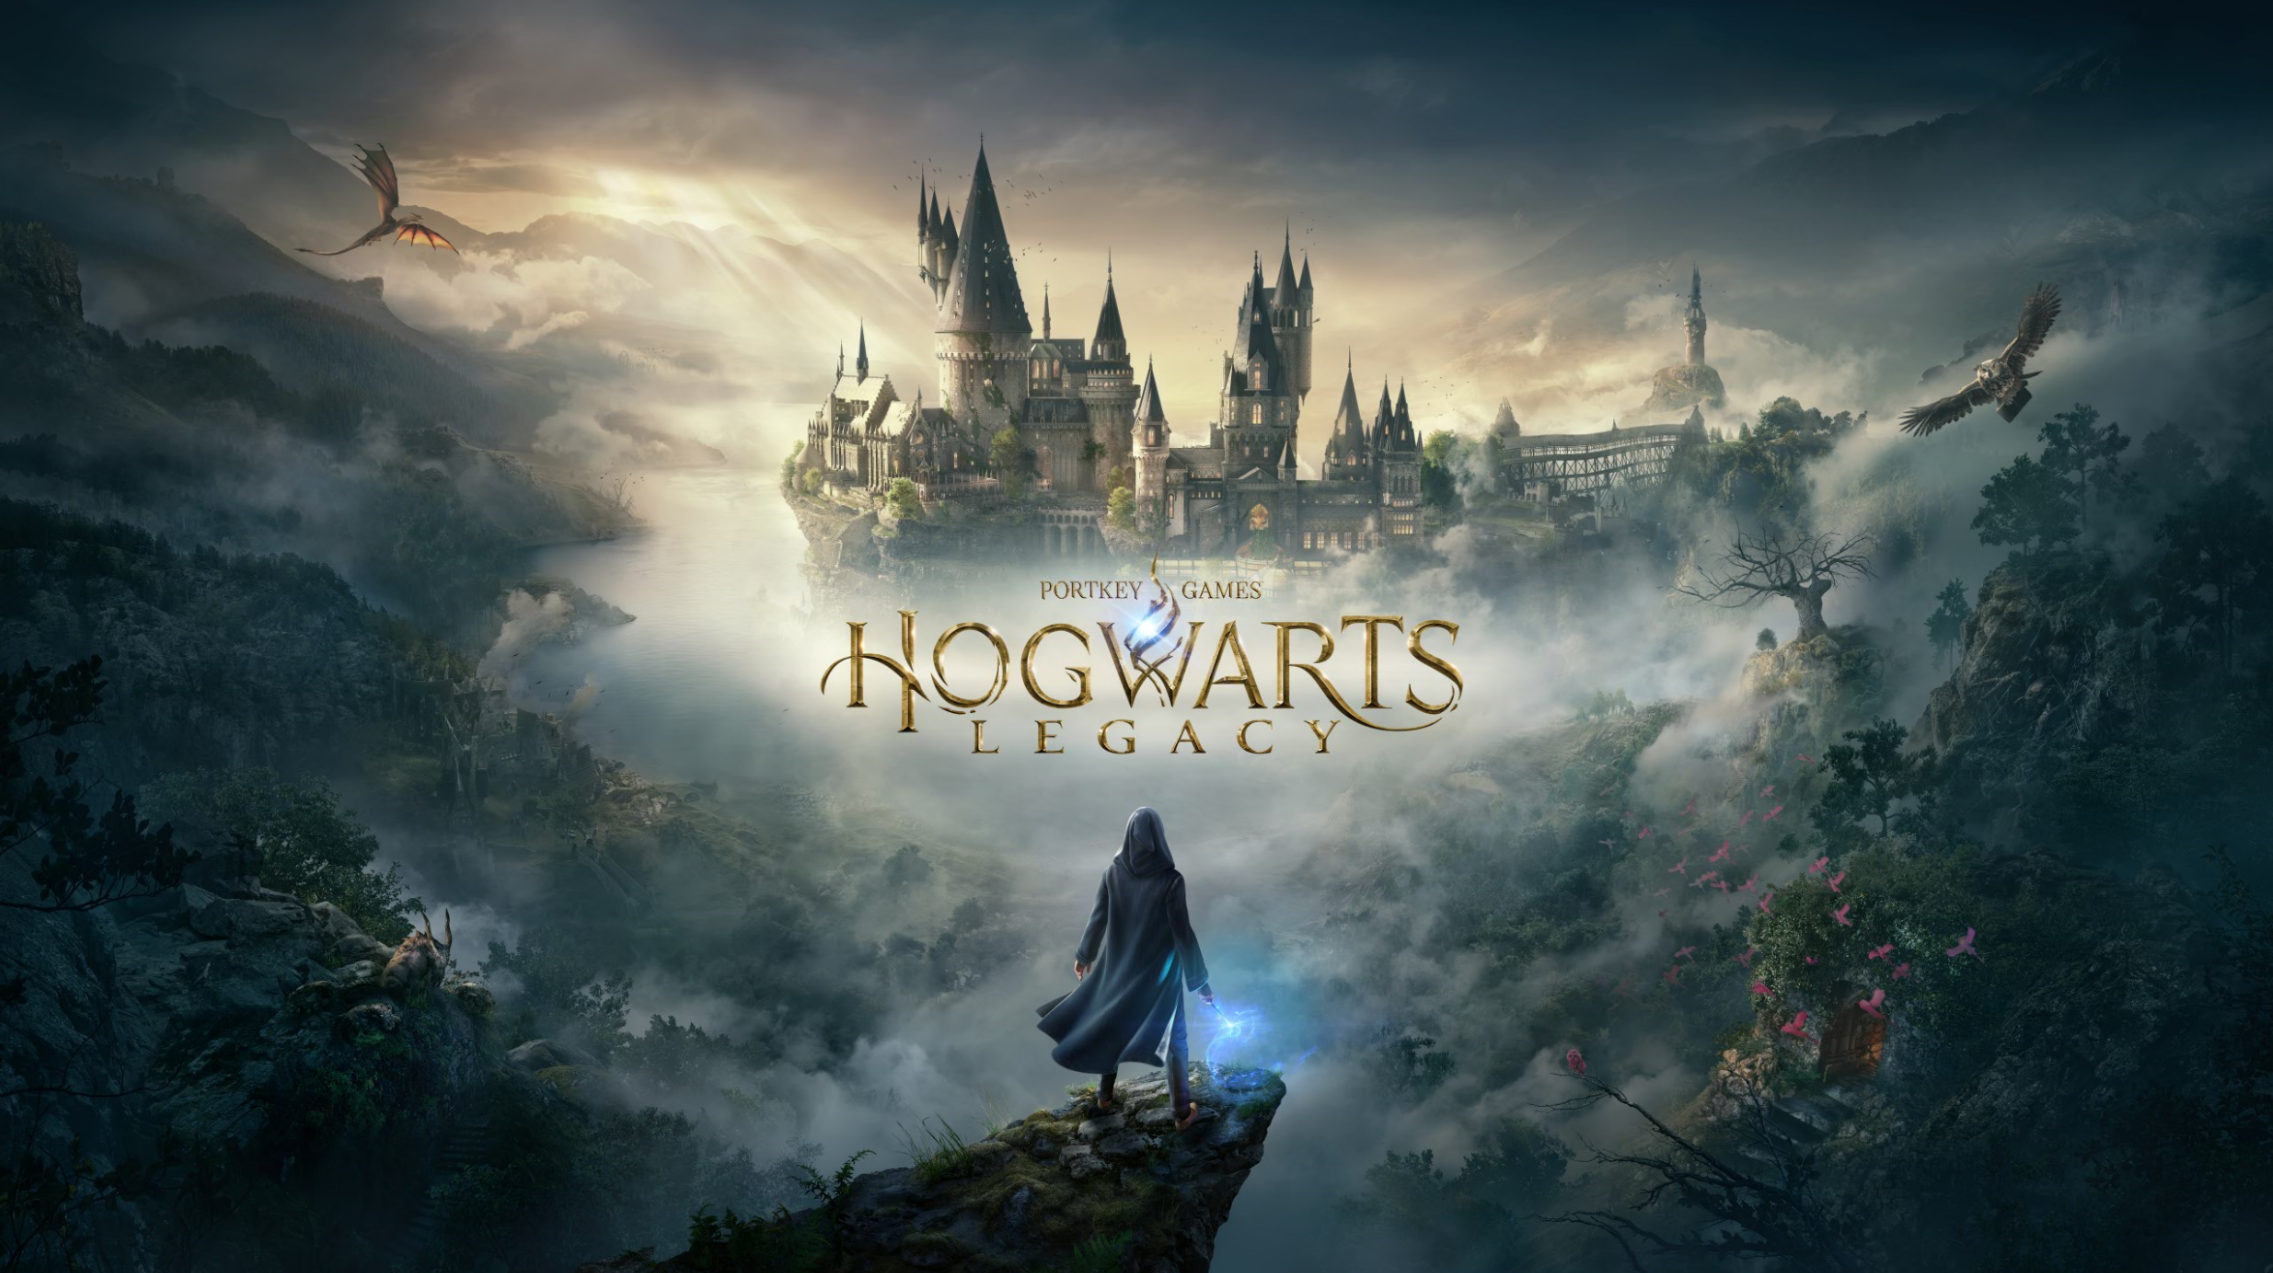 Hogwarts Legacy WB Games Harry Potter game